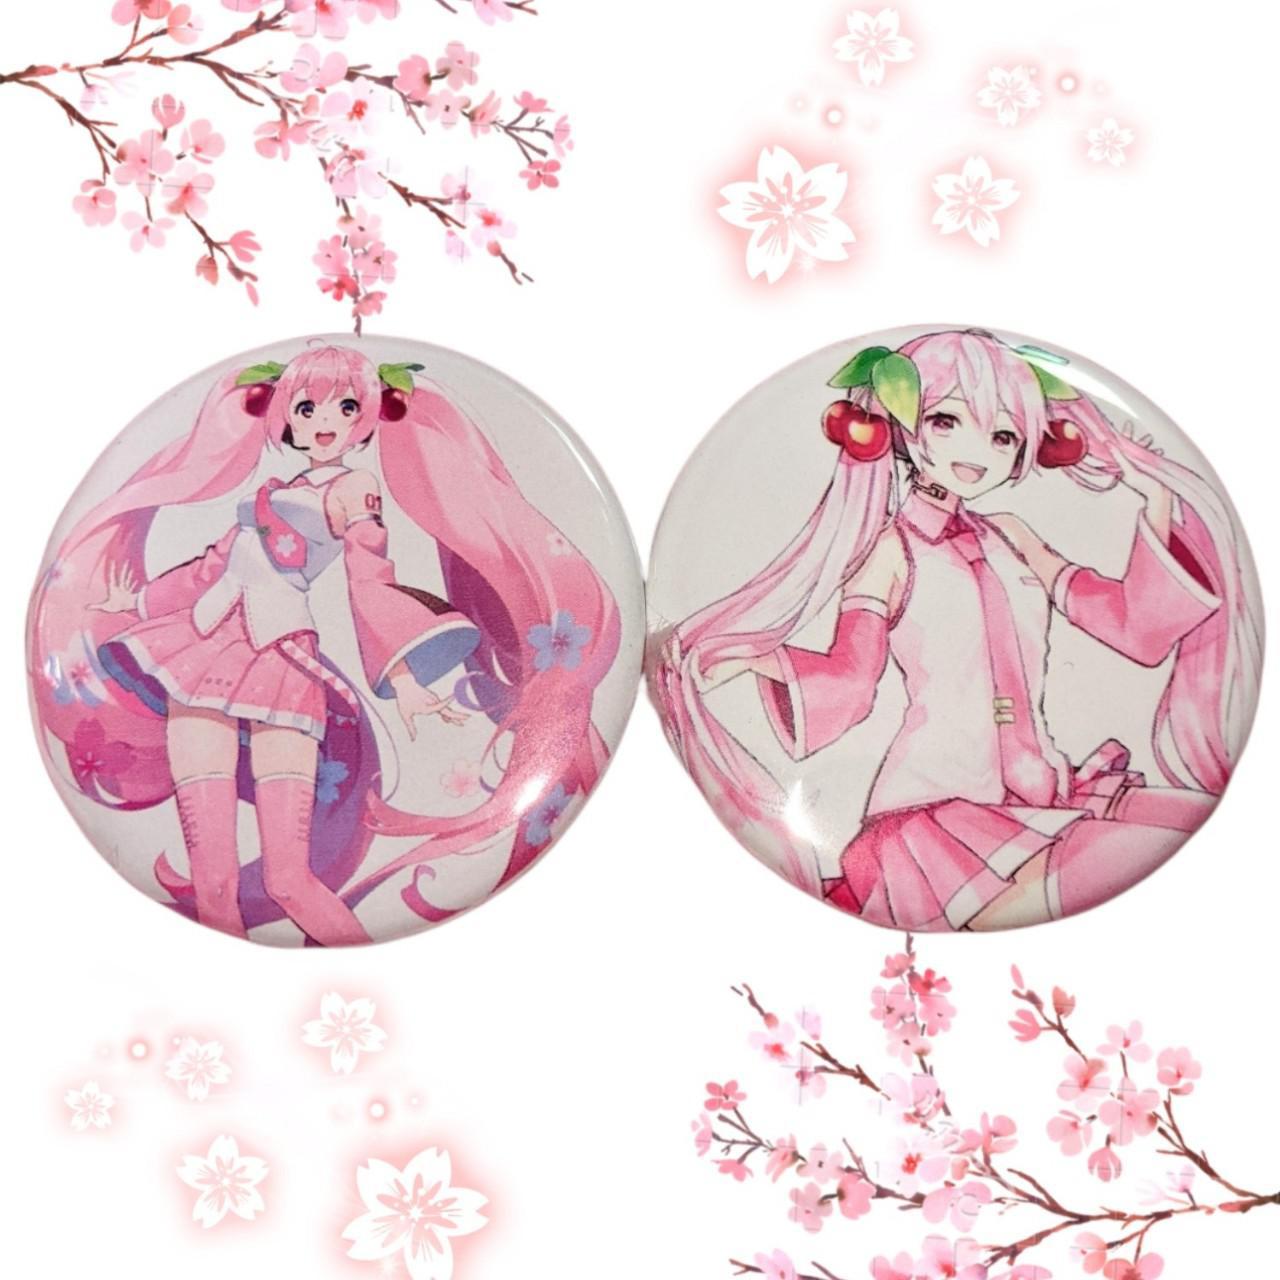 Hatsune Miku sticker set of 2